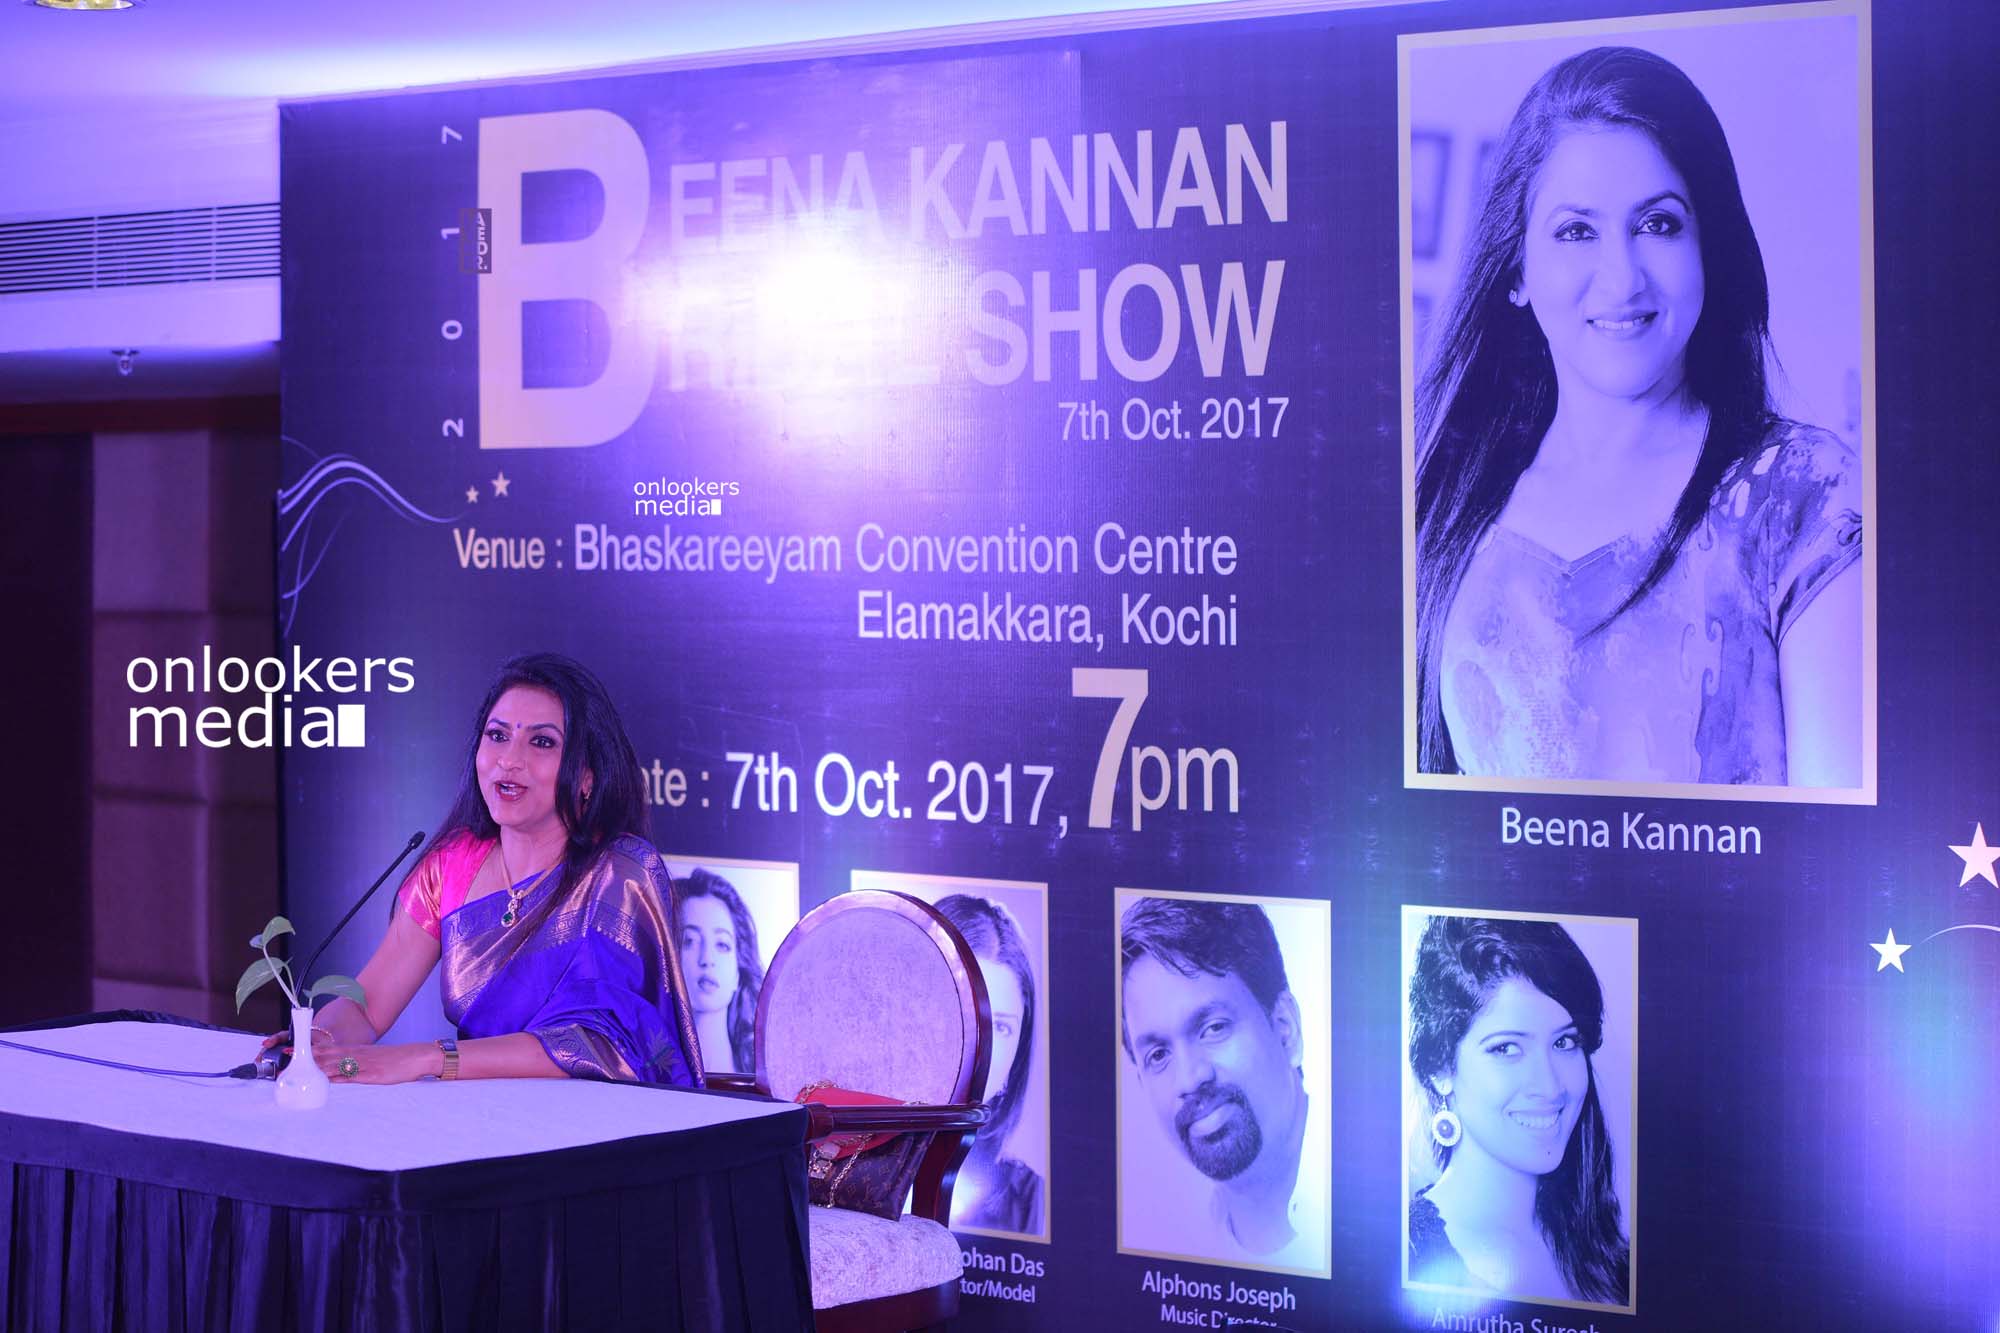 Beena Kannan’s Bridal Show 2017 press meet